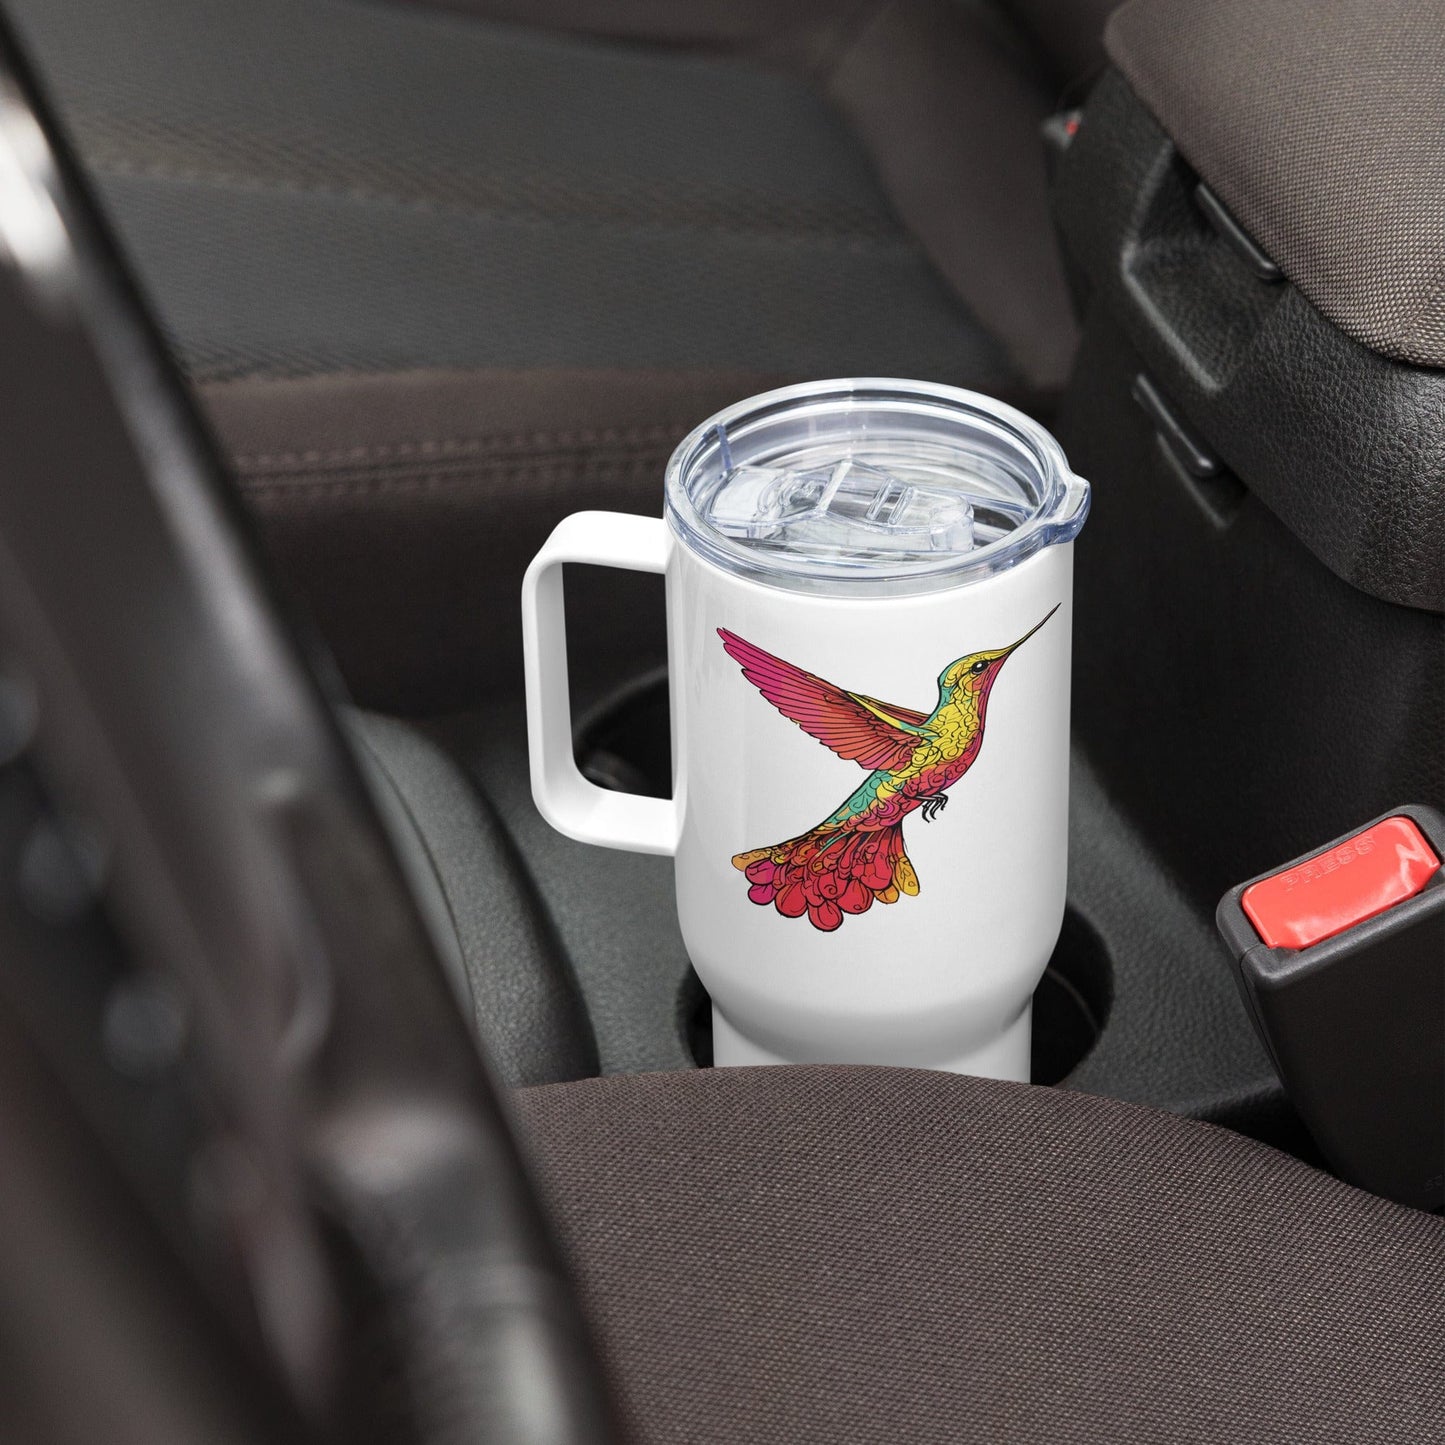 Hummingbird travel mug with a handle | 25 oz (739 ml) - Premium Travel mug - Shop now at San Rocco Italia